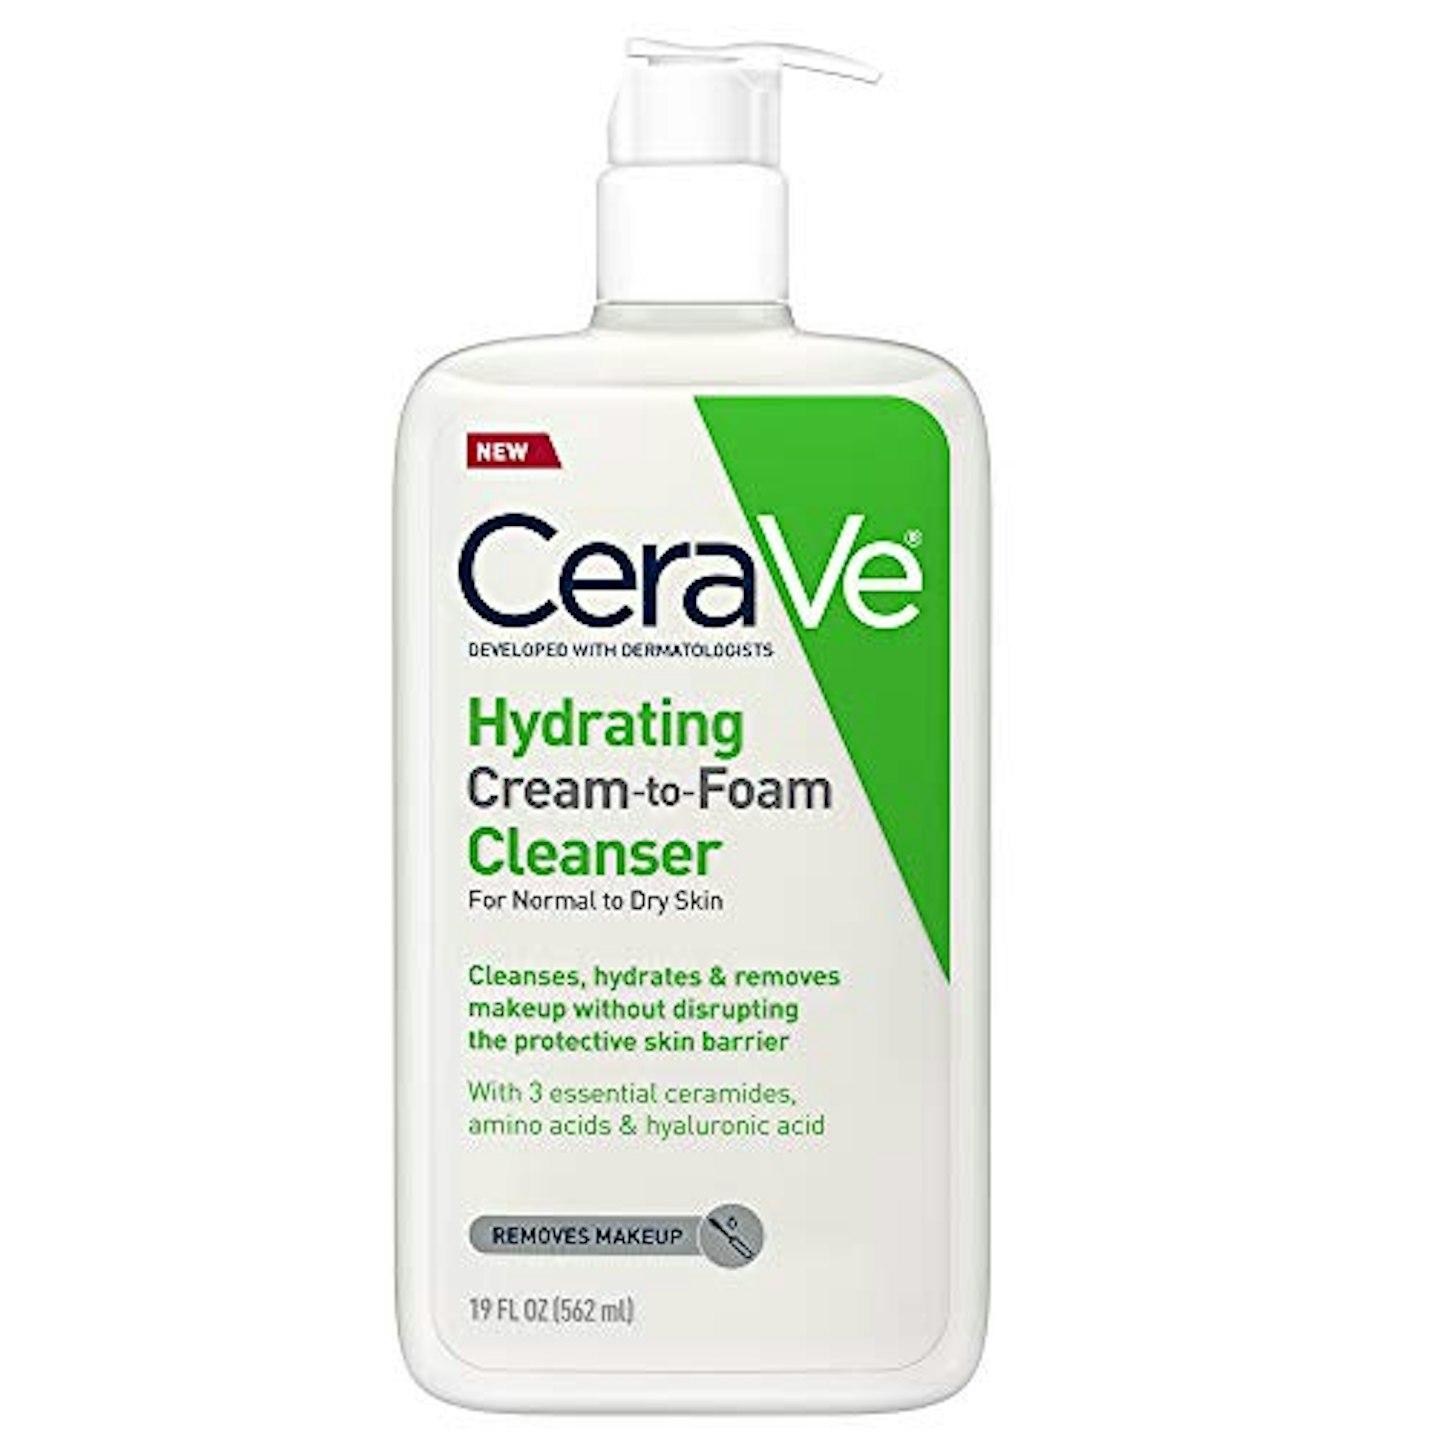 CeraVe skincare review